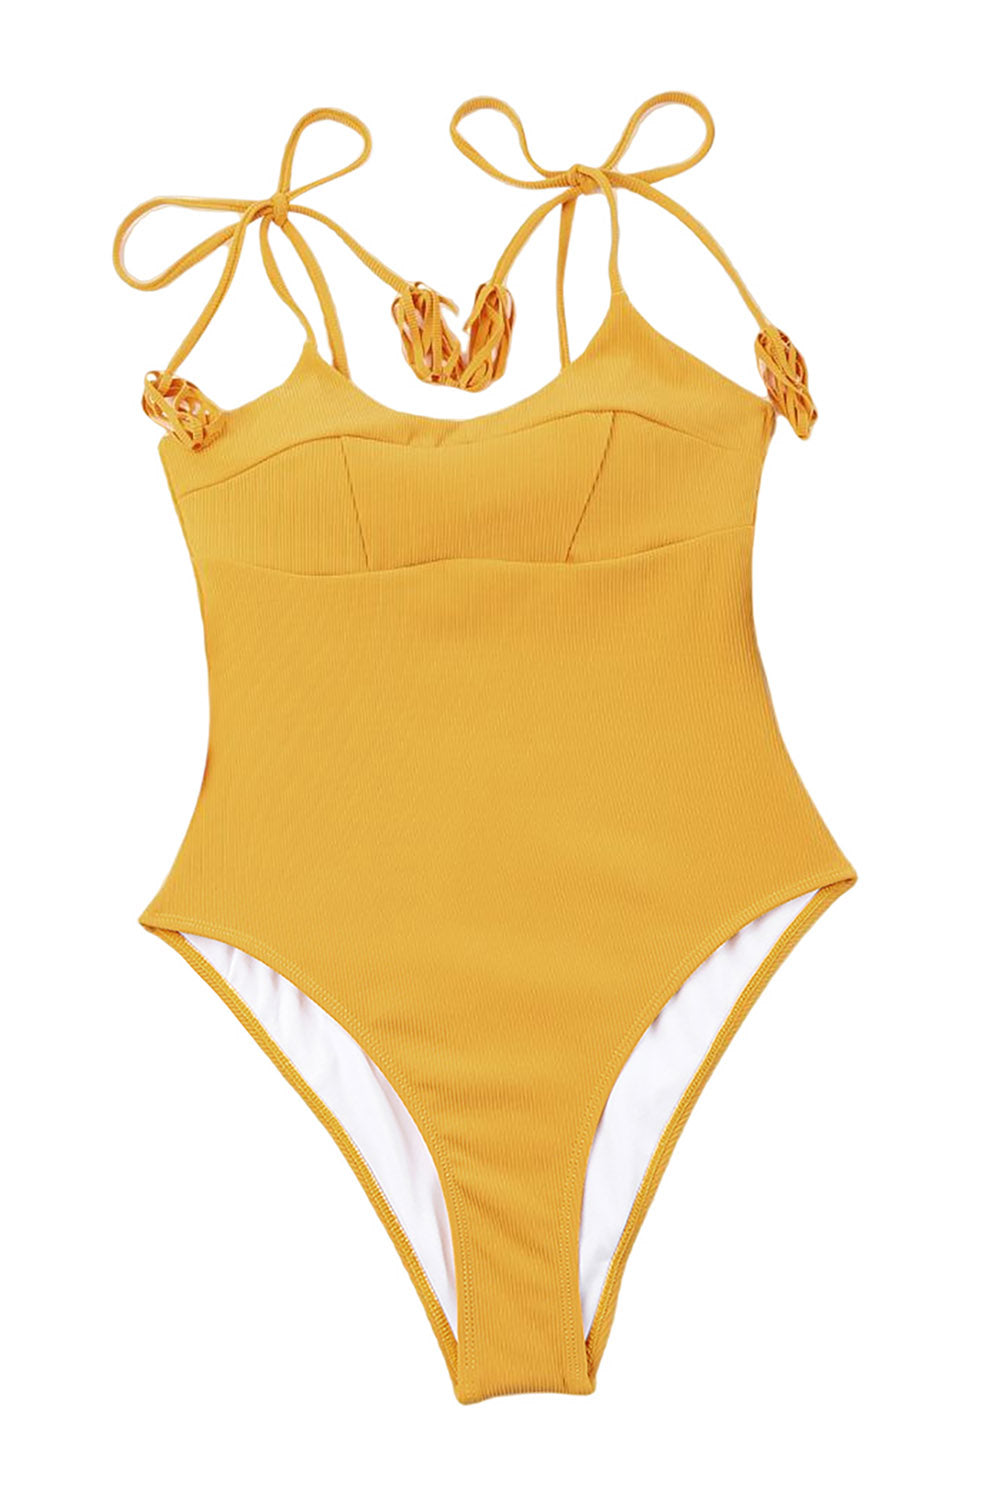 LC443450-7-S, LC443450-7-M, LC443450-7-L, LC443450-7-XL, LC443450-7-2XL, Yellow Women One Piece Swimsuit Tassel Tie Straps Ribbed Bathing Suit